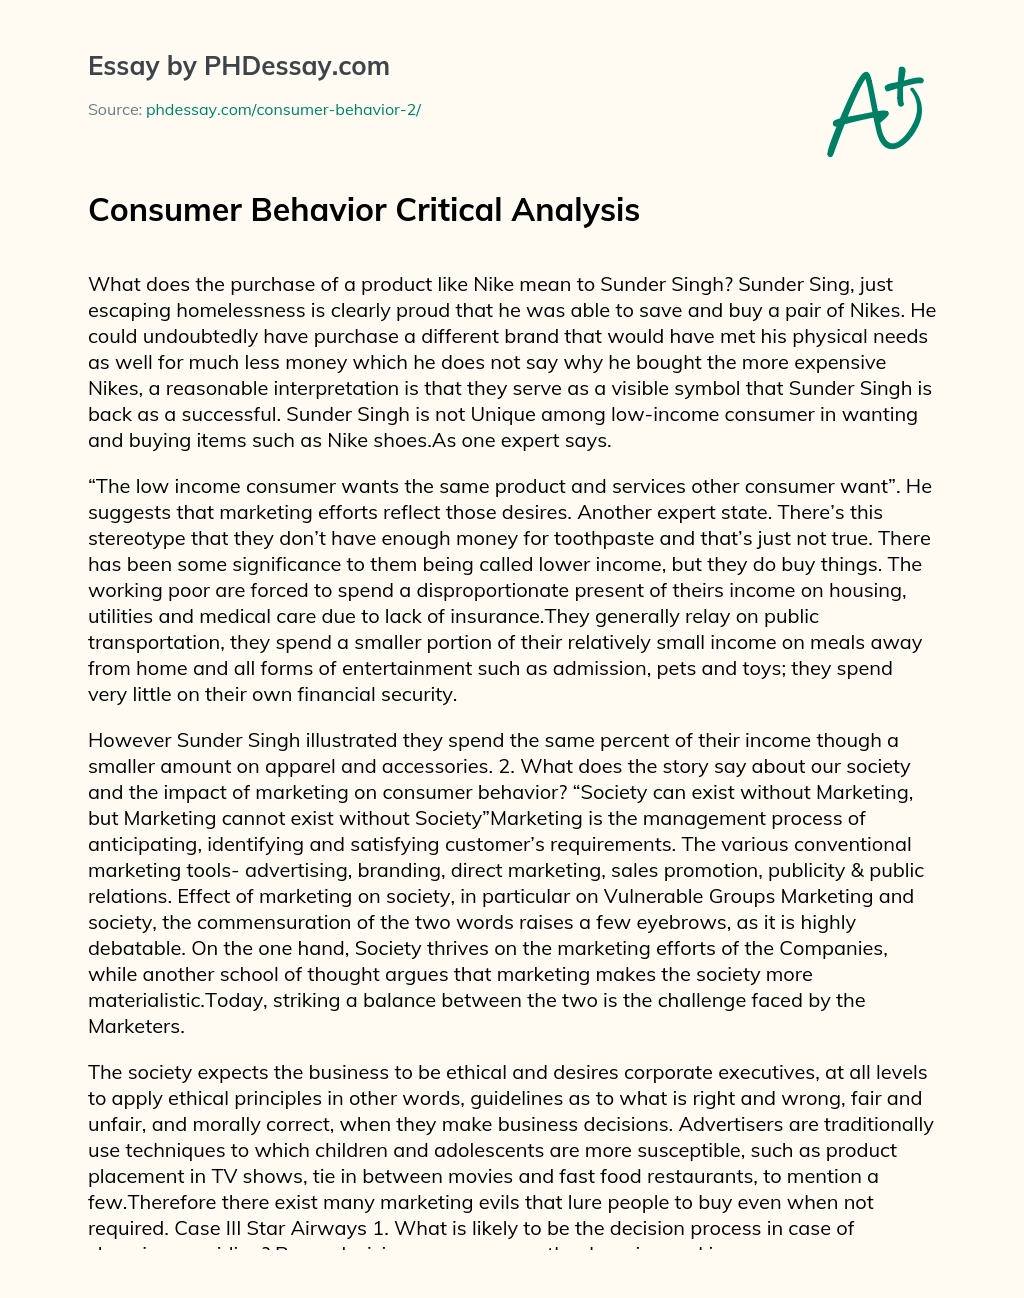 Consumer Behavior Critical Analysis essay